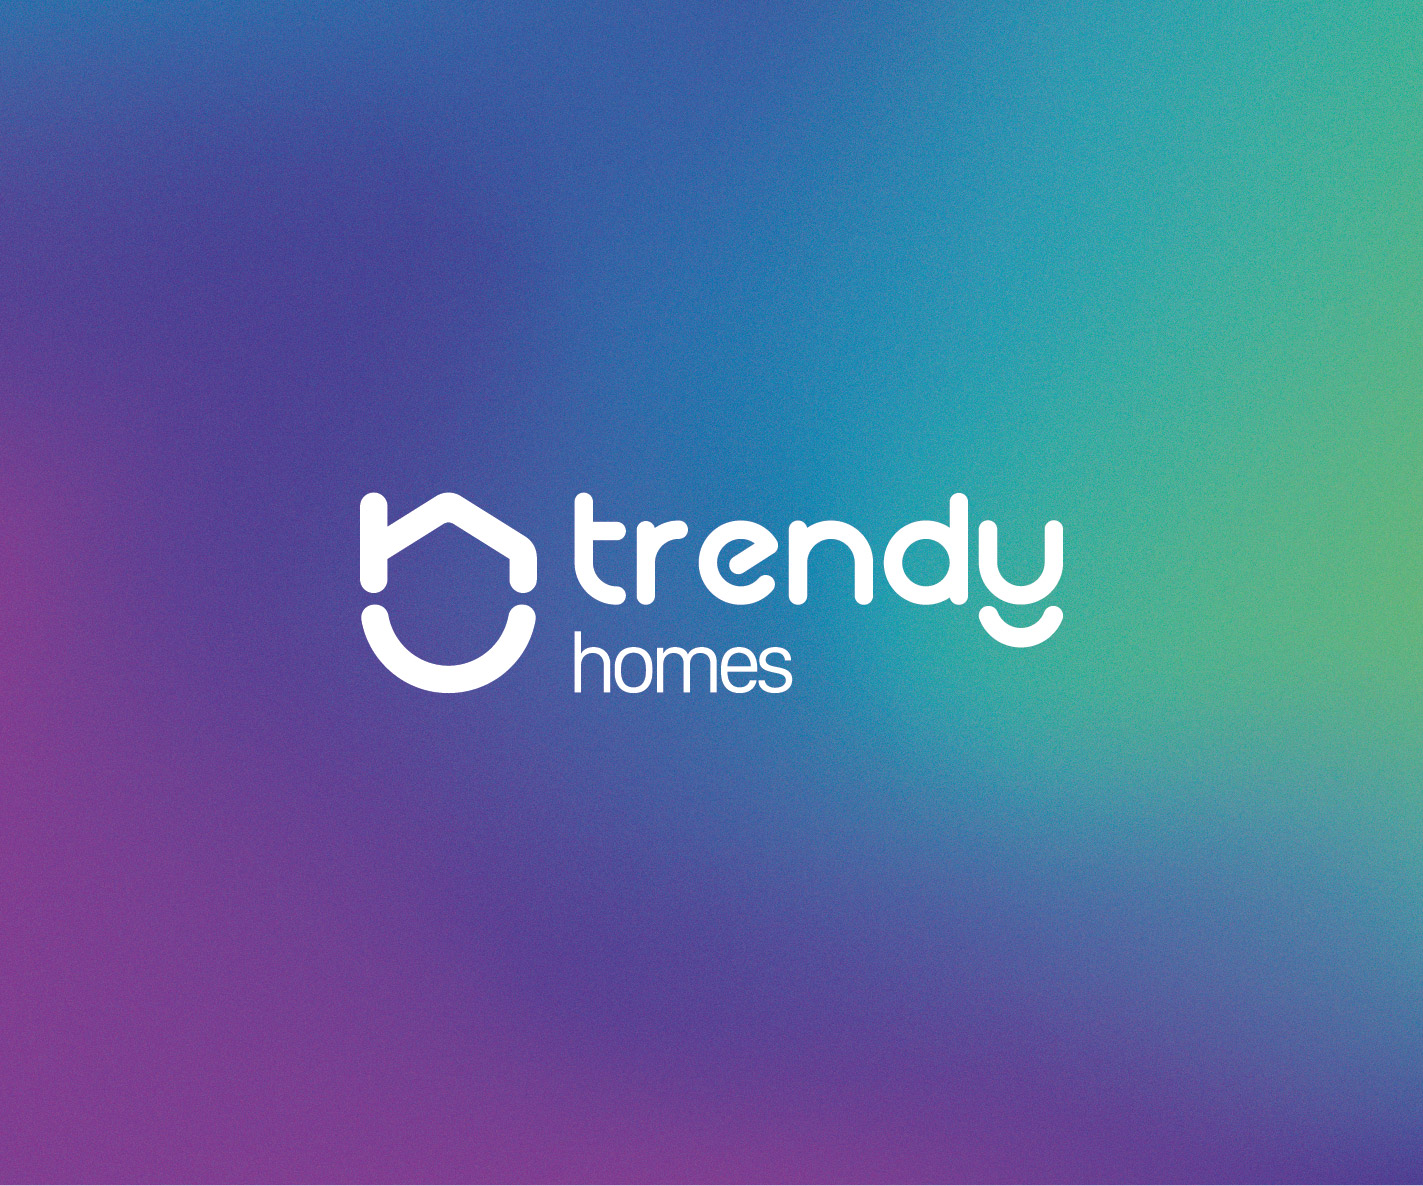 Trendy homes